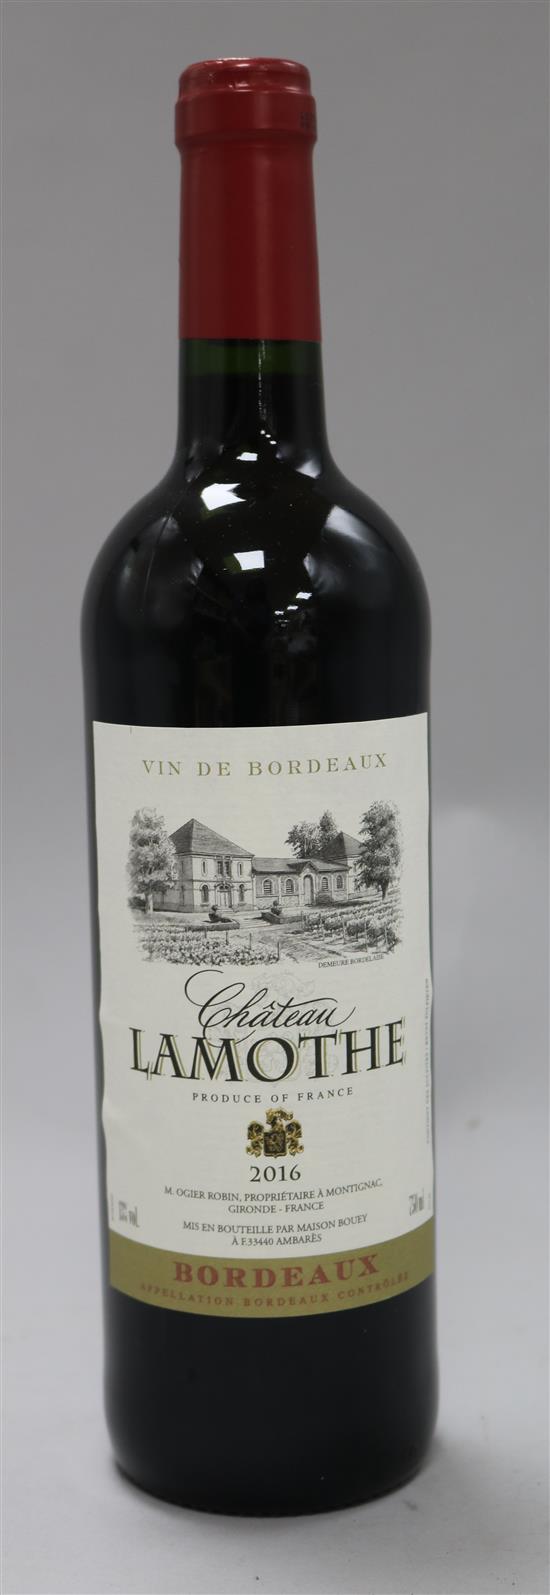 Ten bottles of Chateau Lamothe Bordeaux